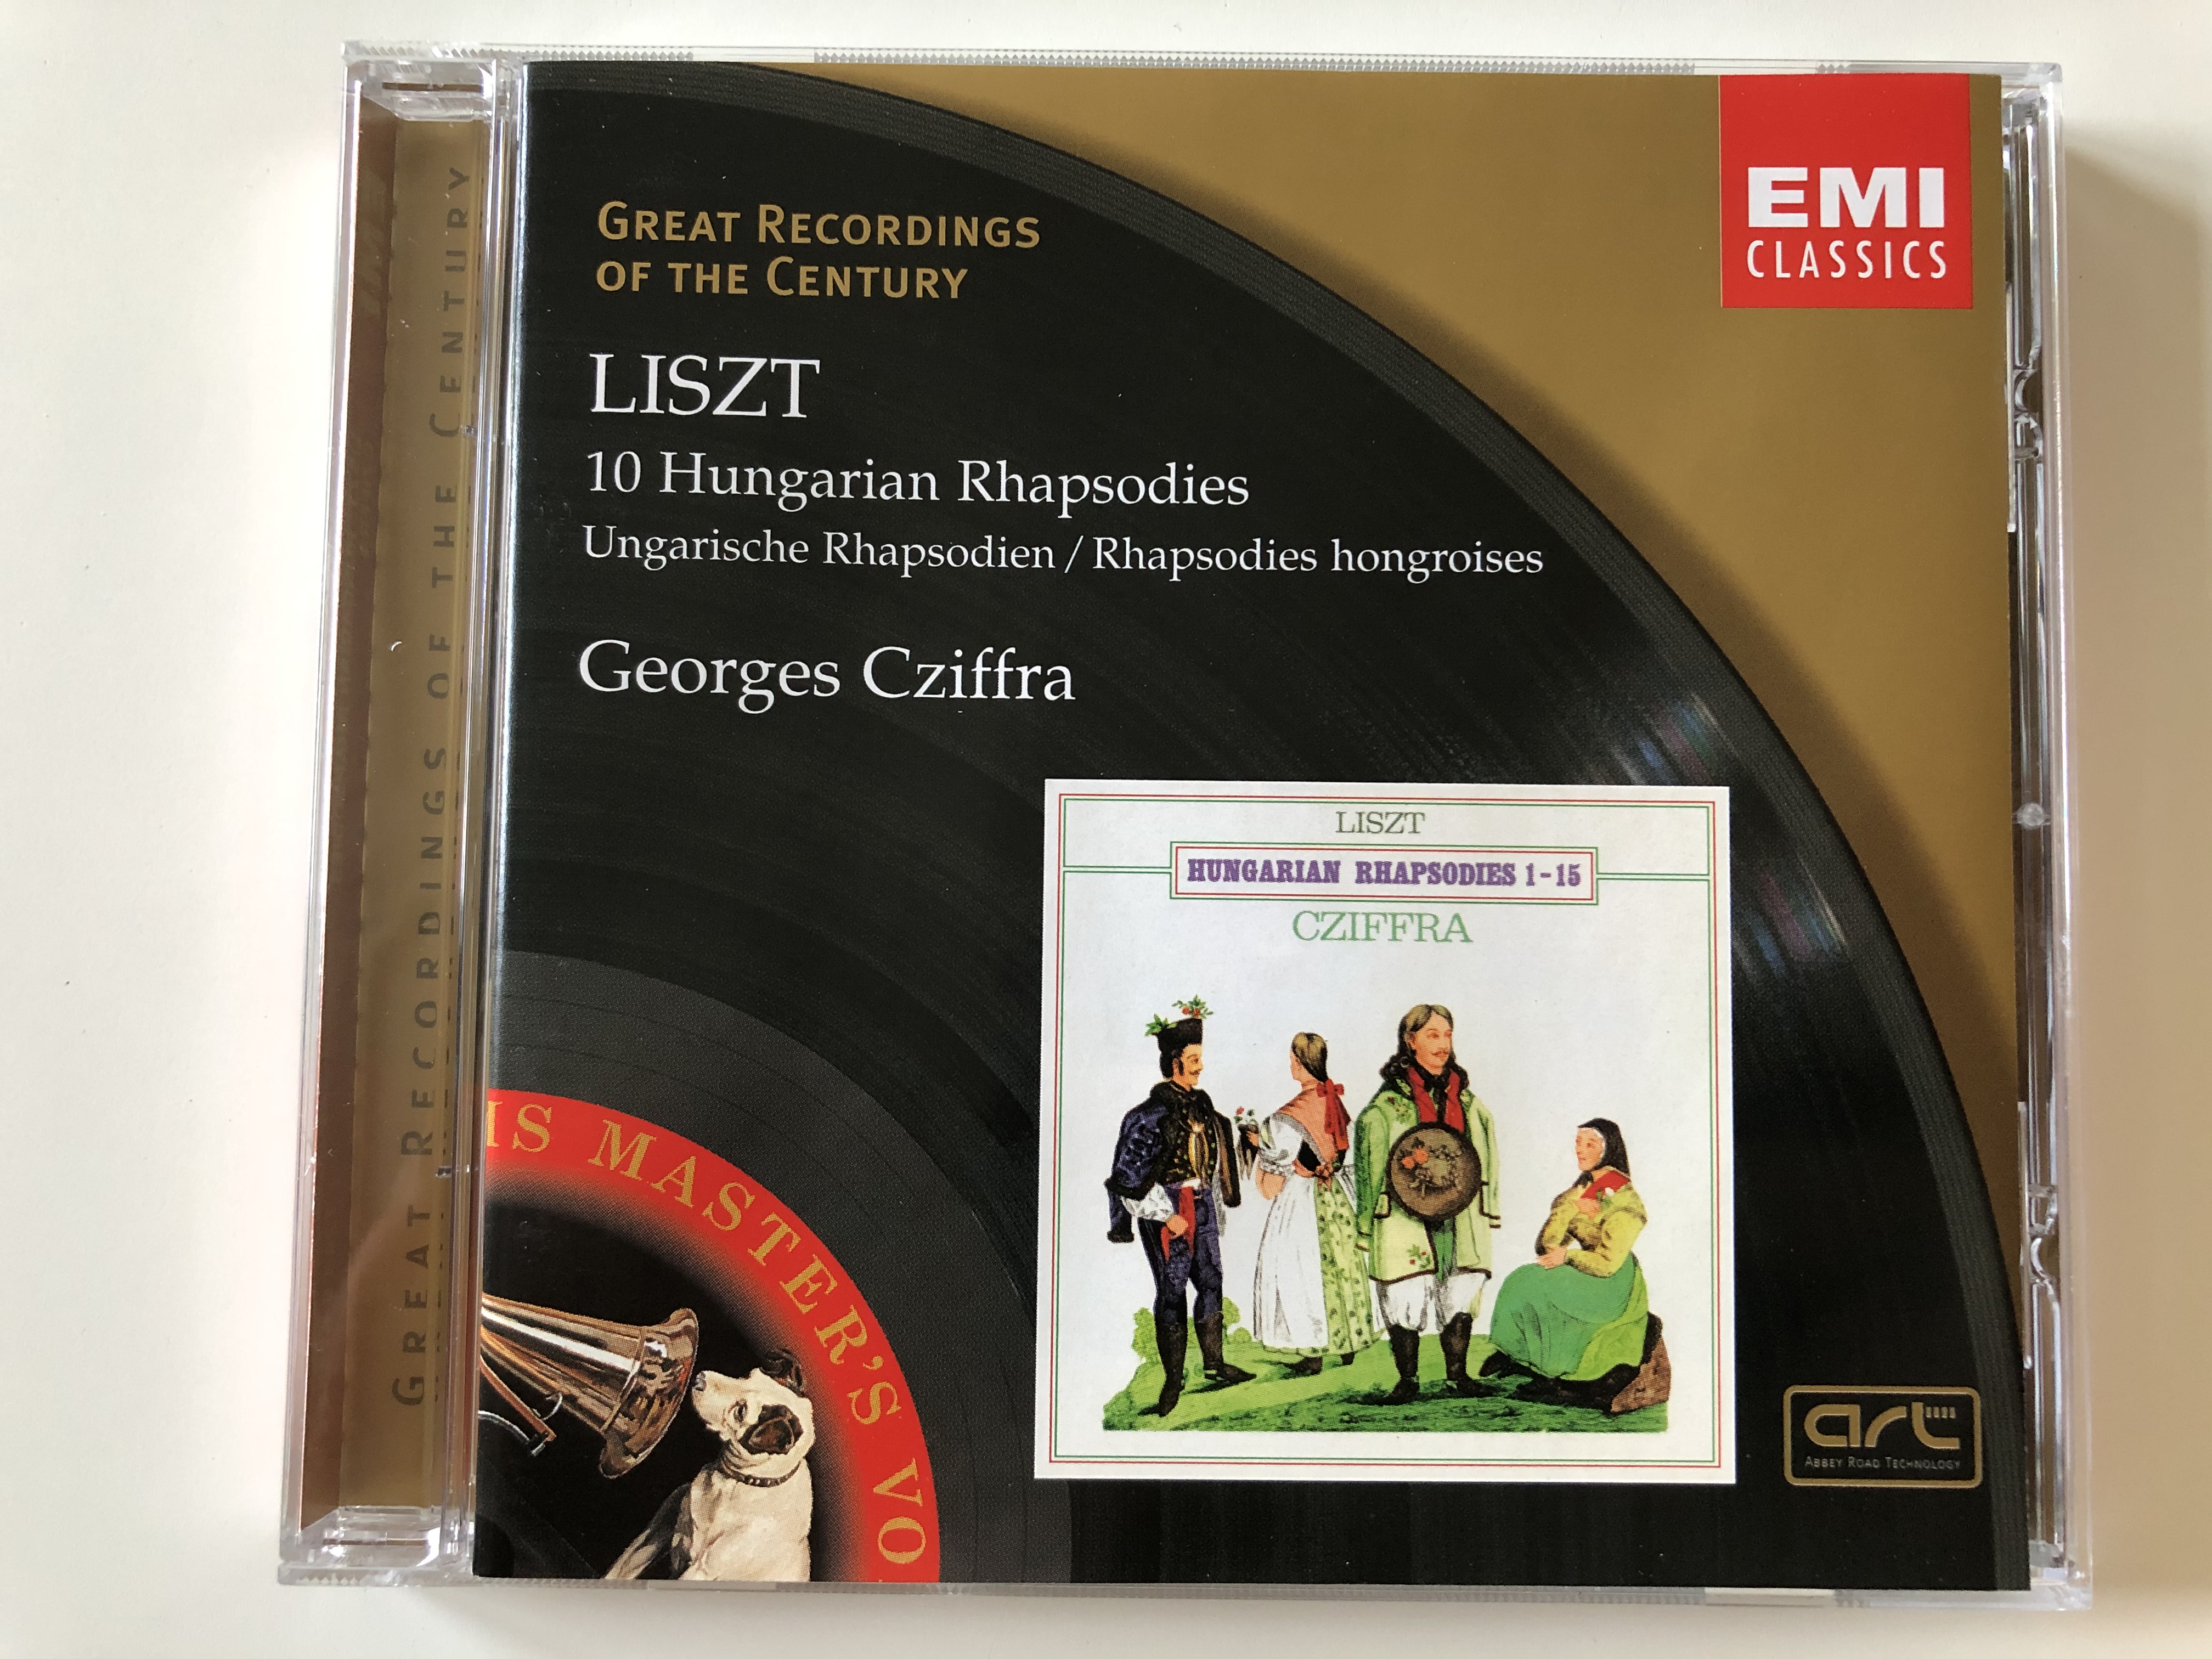 liszt-10-hungarian-rhapsodies-georges-cziffra-great-recordings-of-the-century-emi-classics-audio-cd-2001-stereo-724356755420-1-.jpg